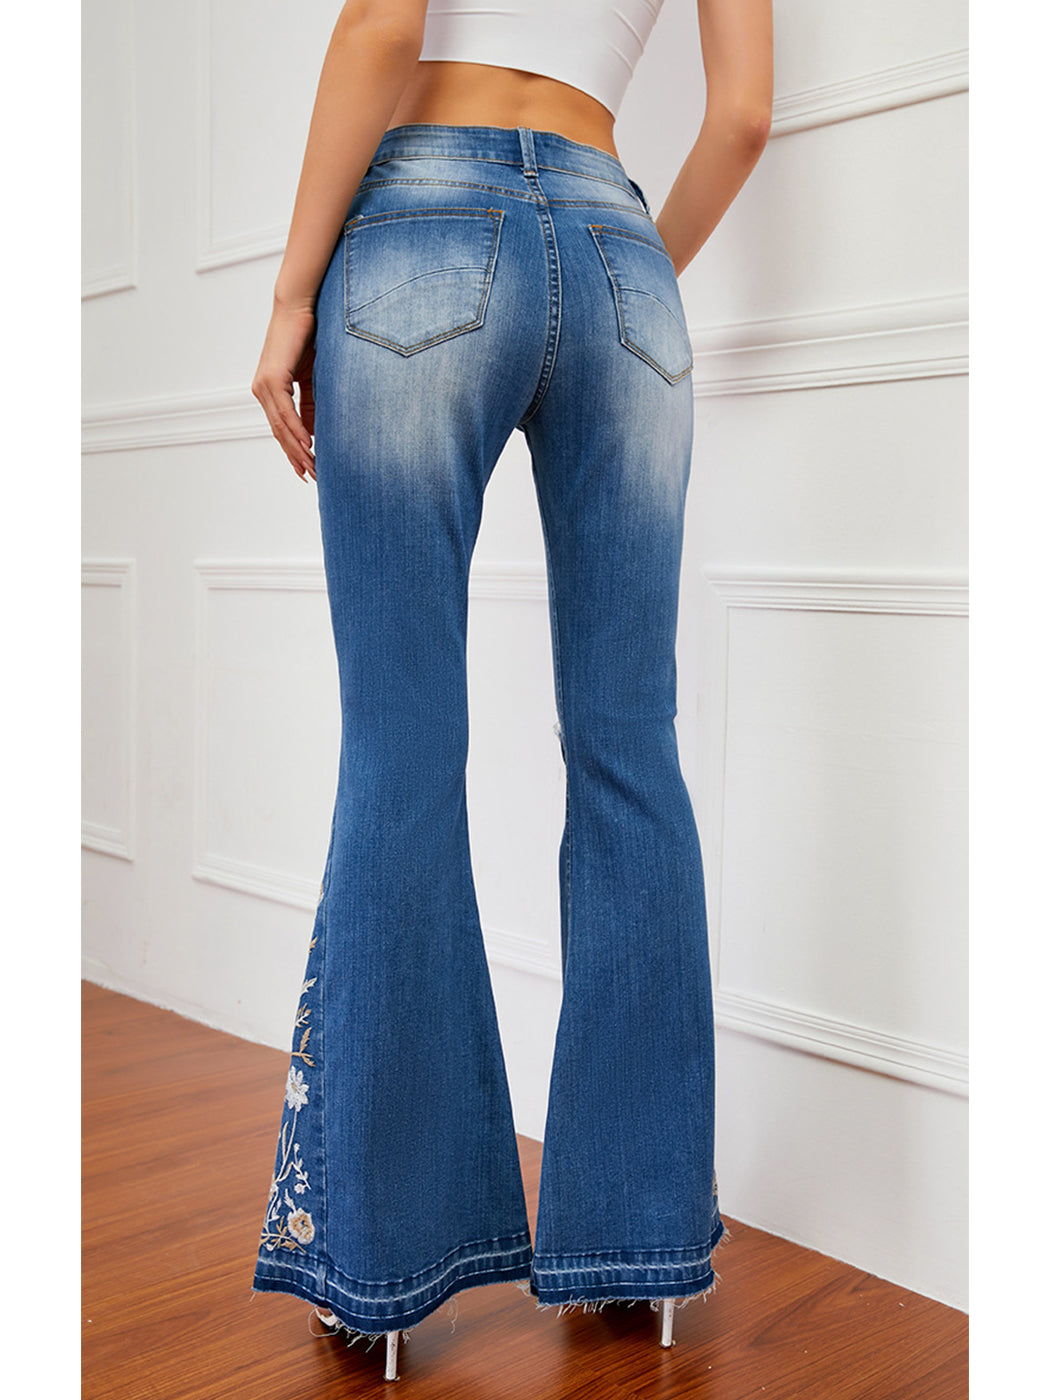 Anna-Kaci Women's Retro Flared Jeans High Waist Star Printed Long Denim  Bell Bottom Jeans, Off White, Large 